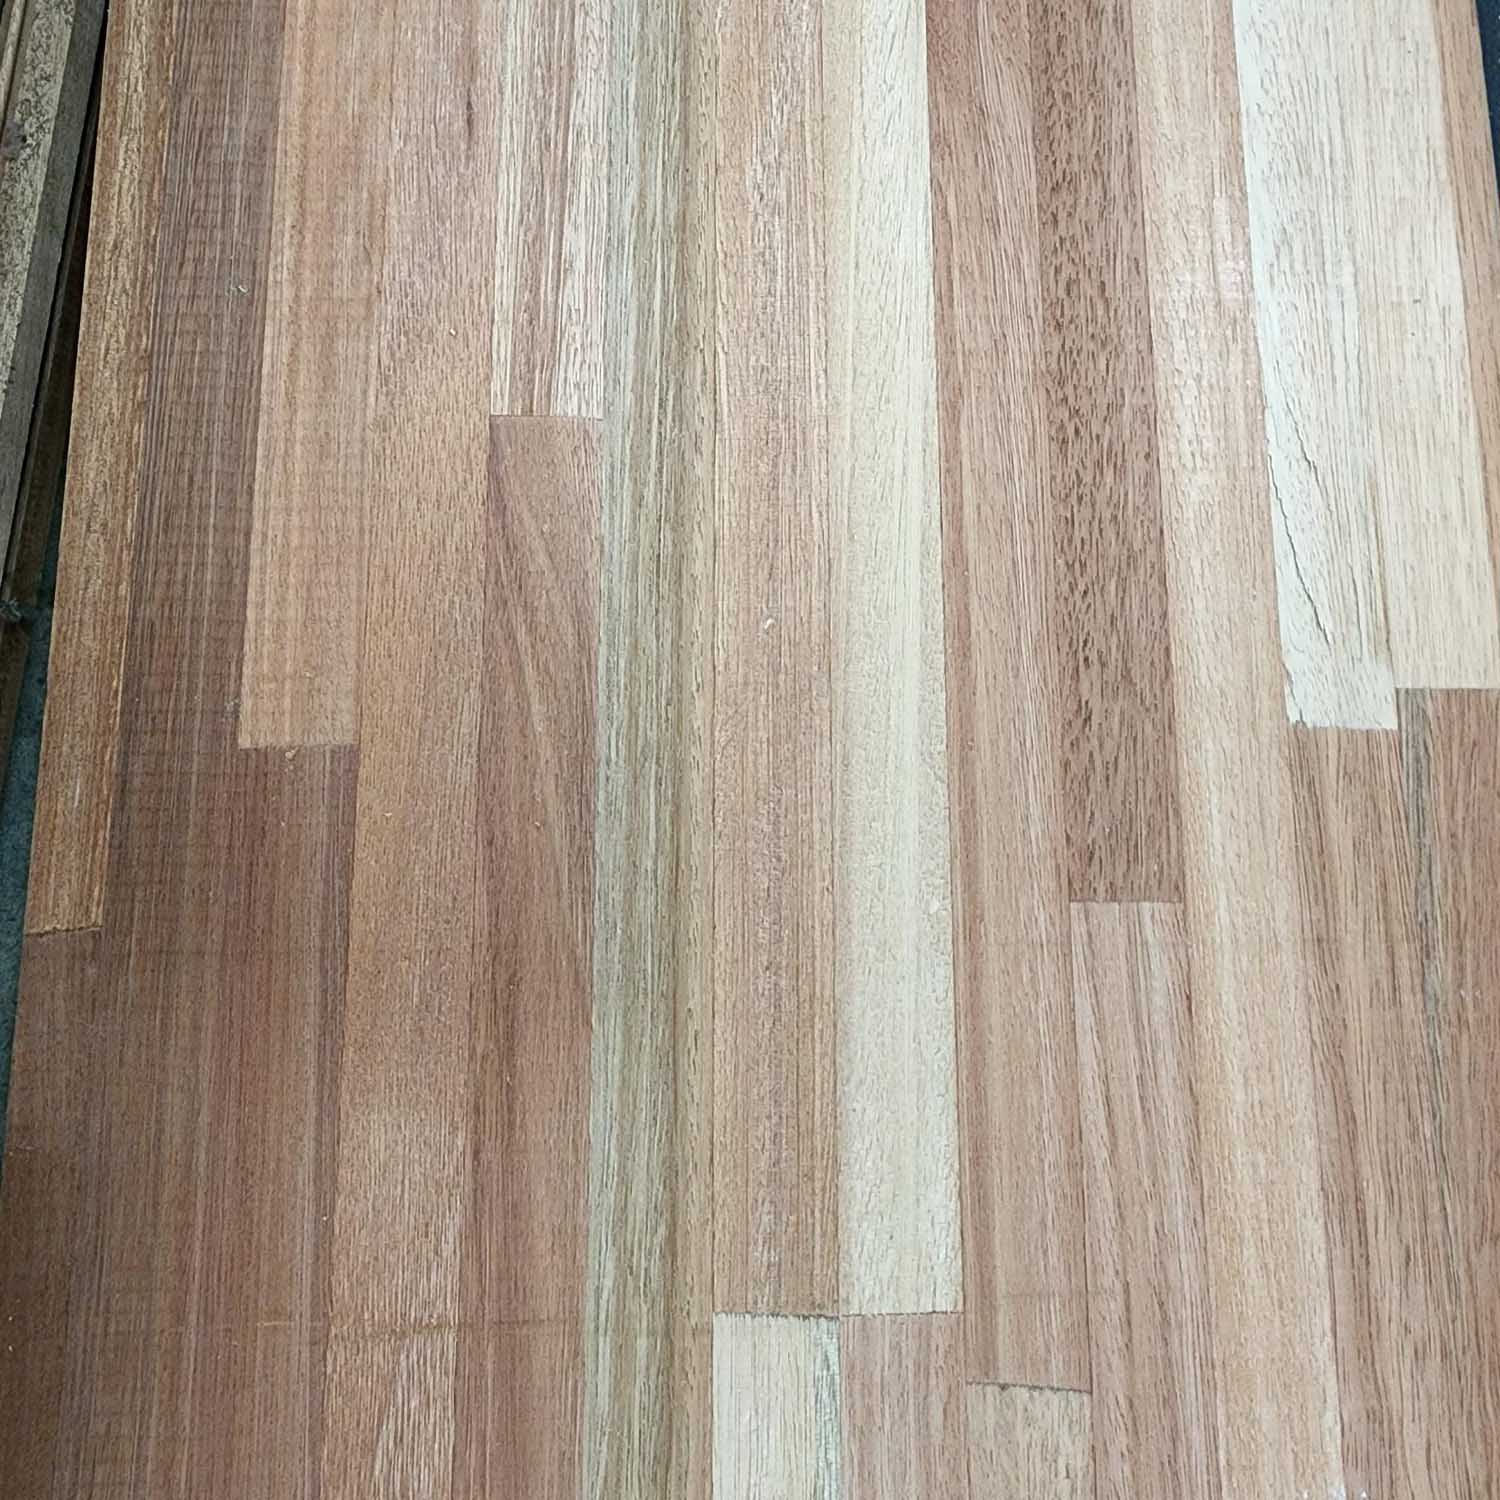 Mixed Hardwood SUP Shiplap Flooring